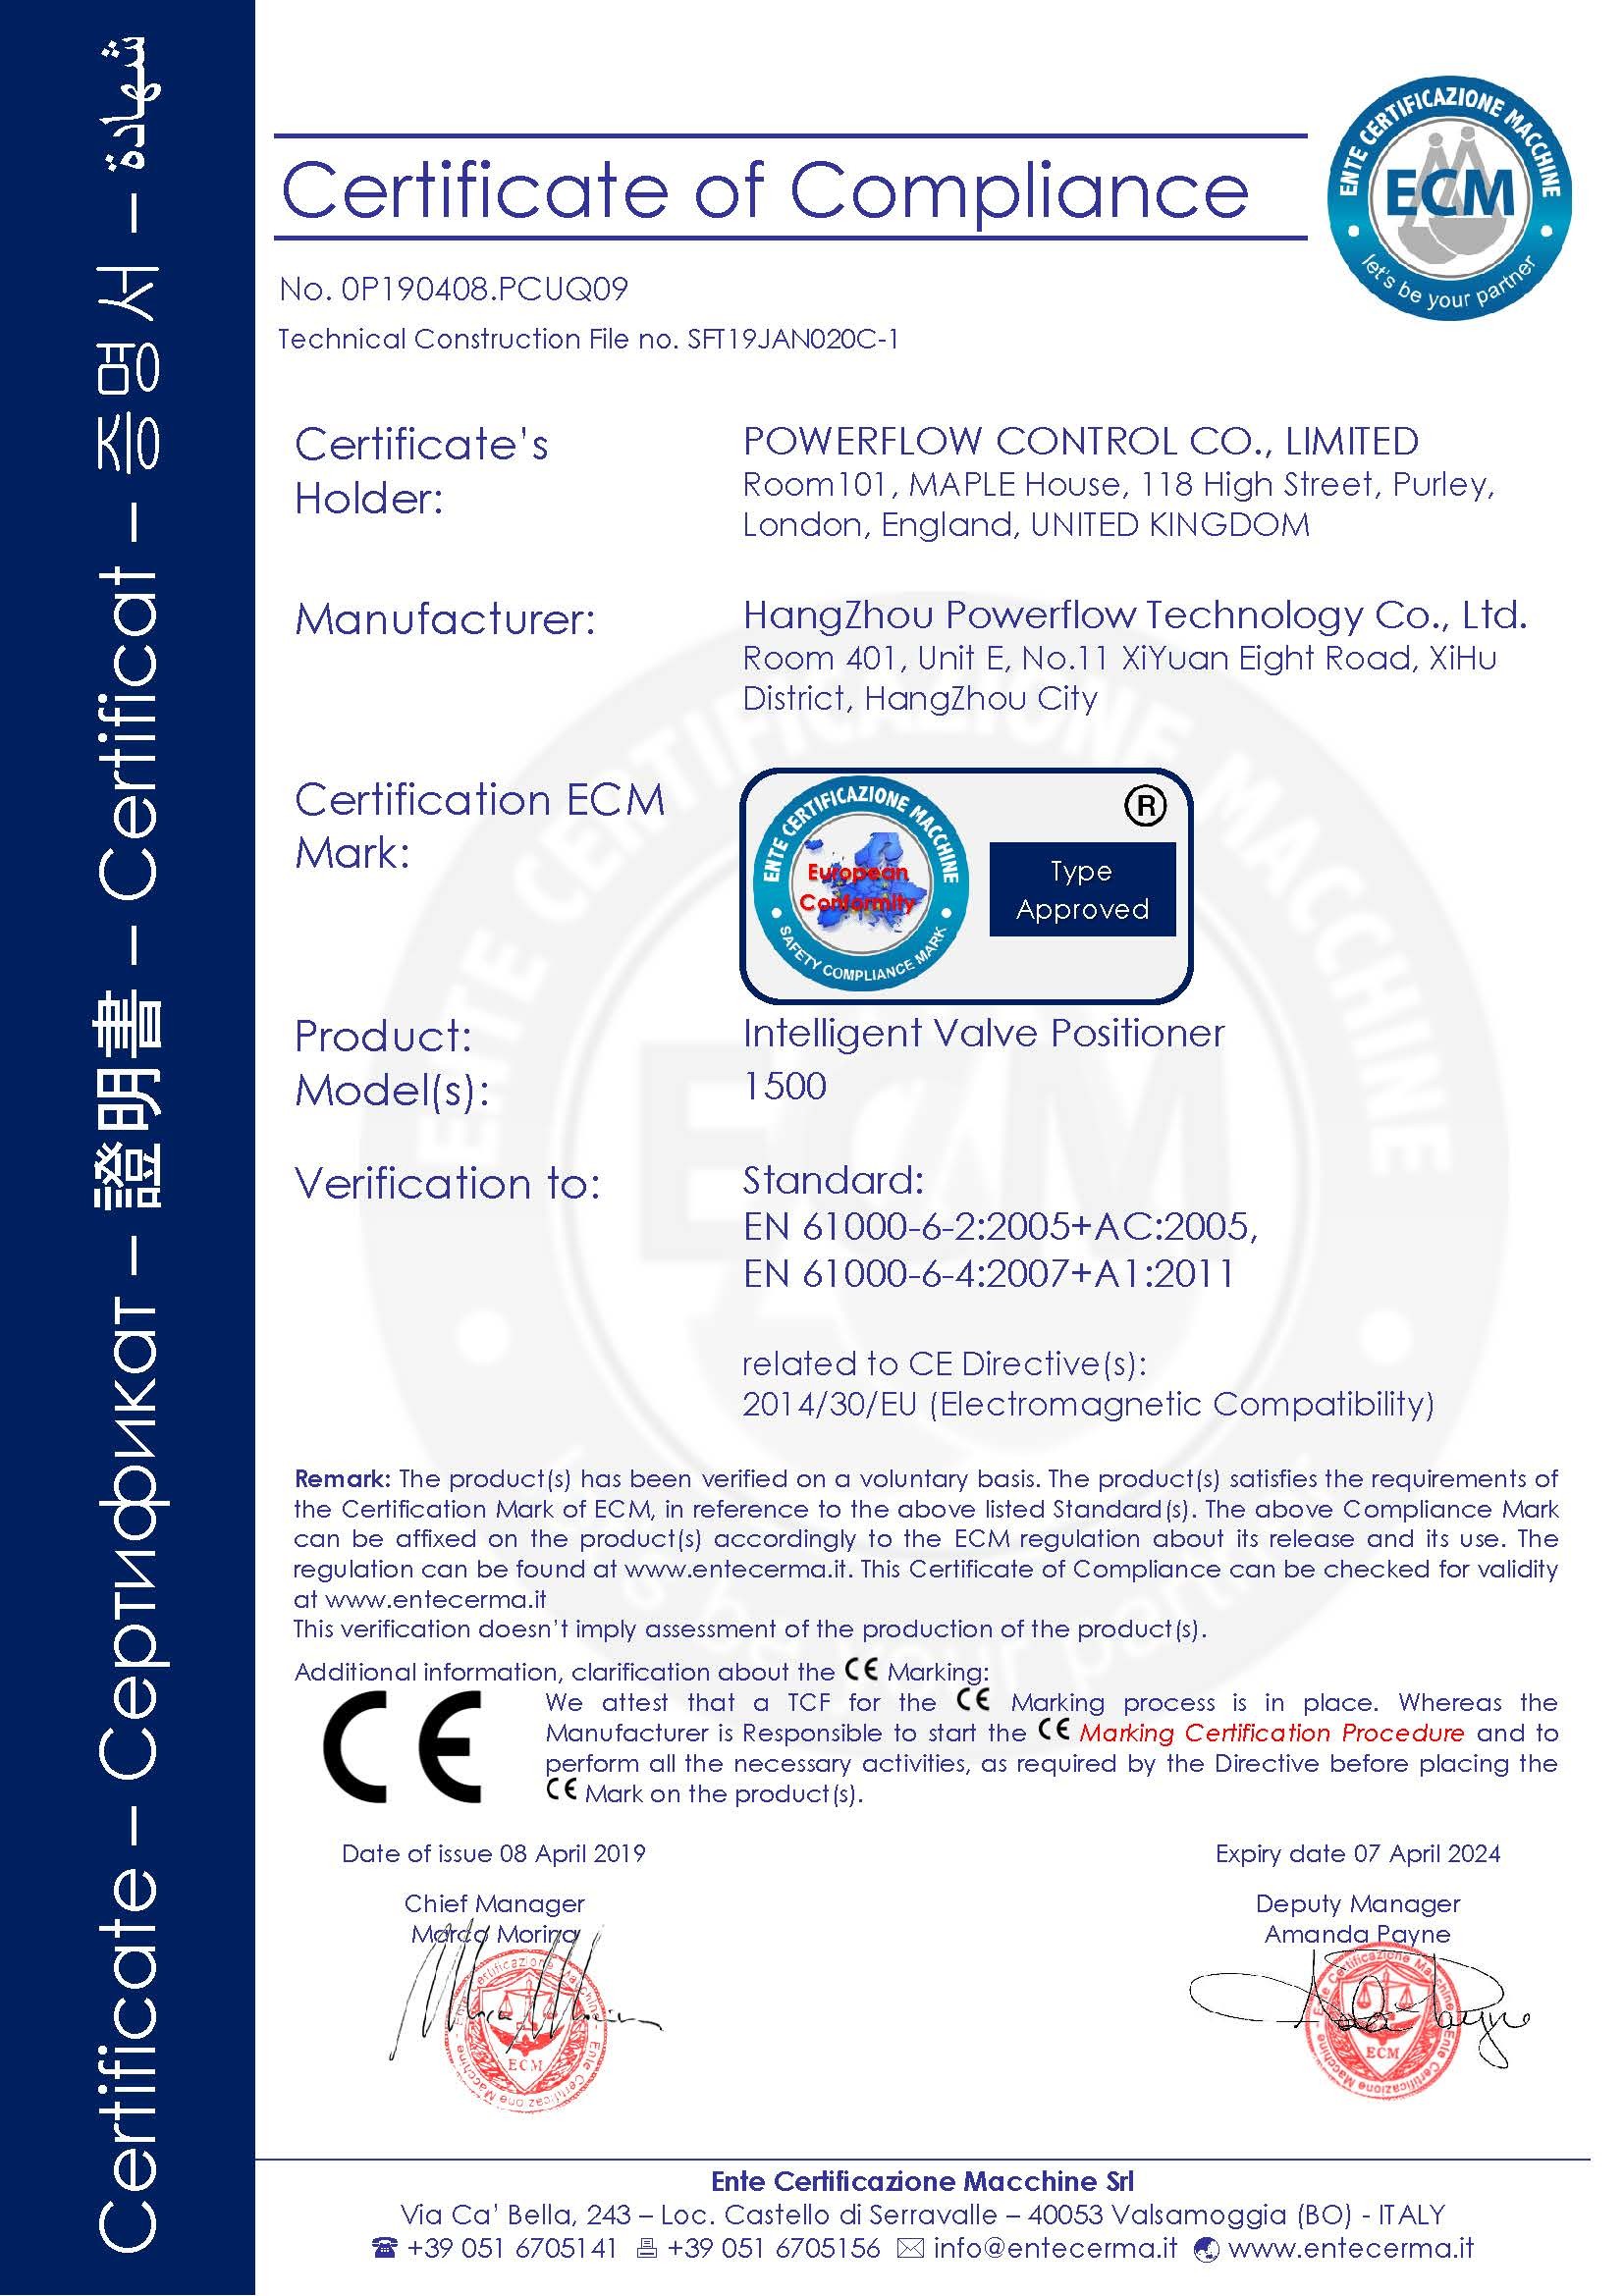 POWERFLOW CONTROL CO,. LTD. Certifications